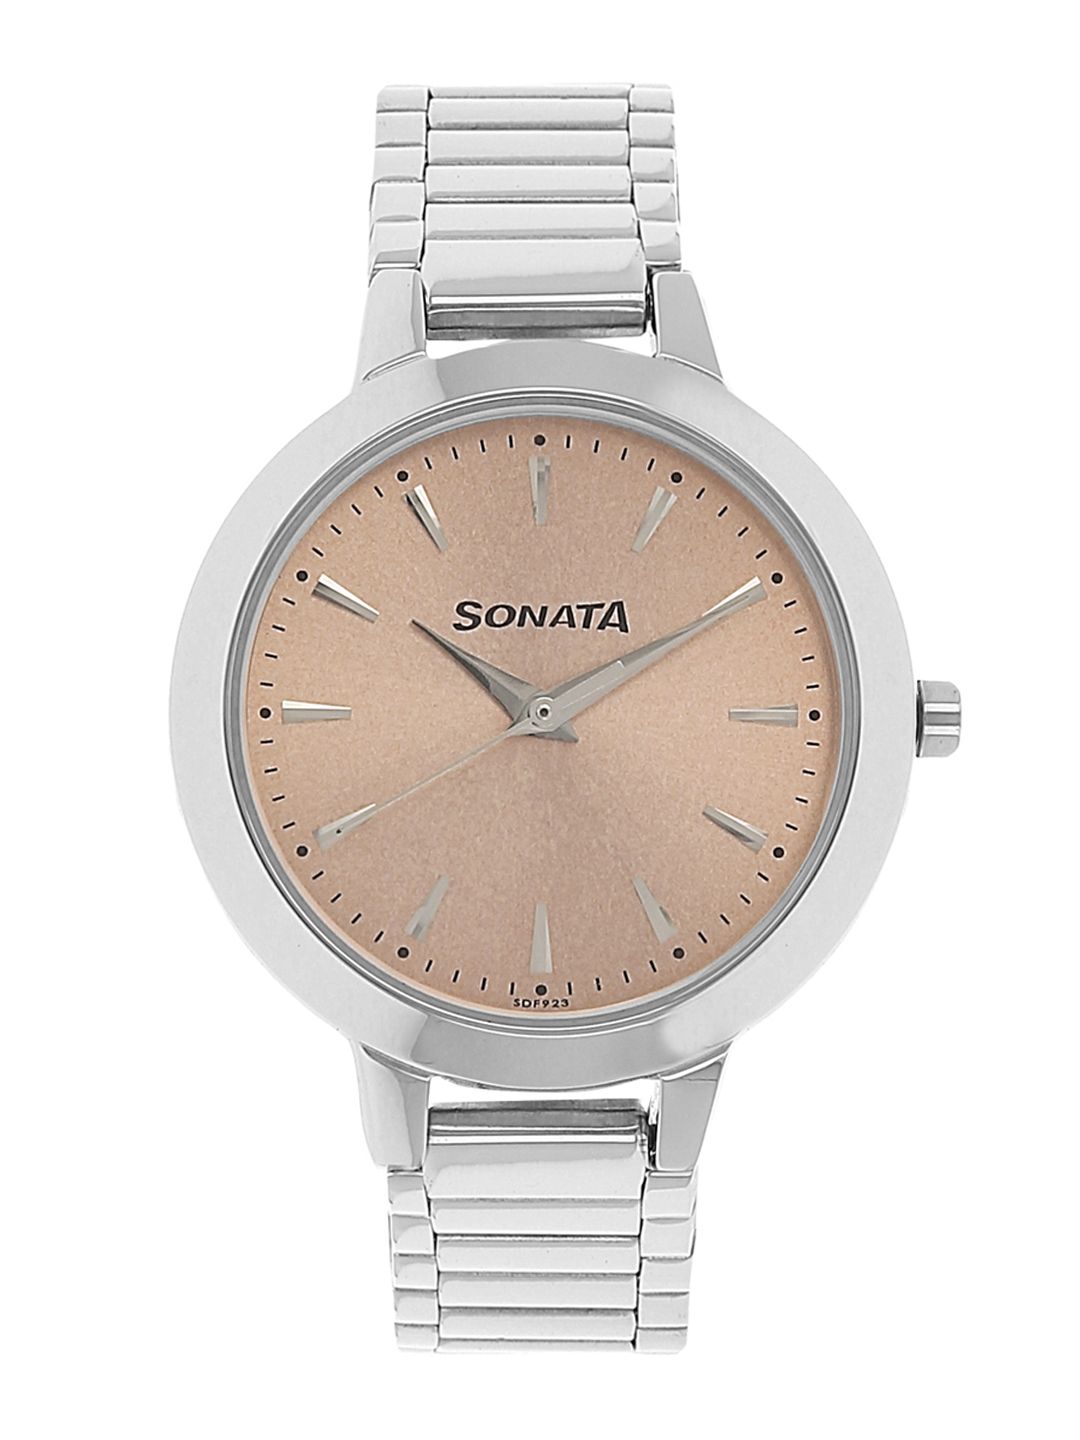 Sonata Elite Women Silver Analogue watch NL8141SM01 Price in India